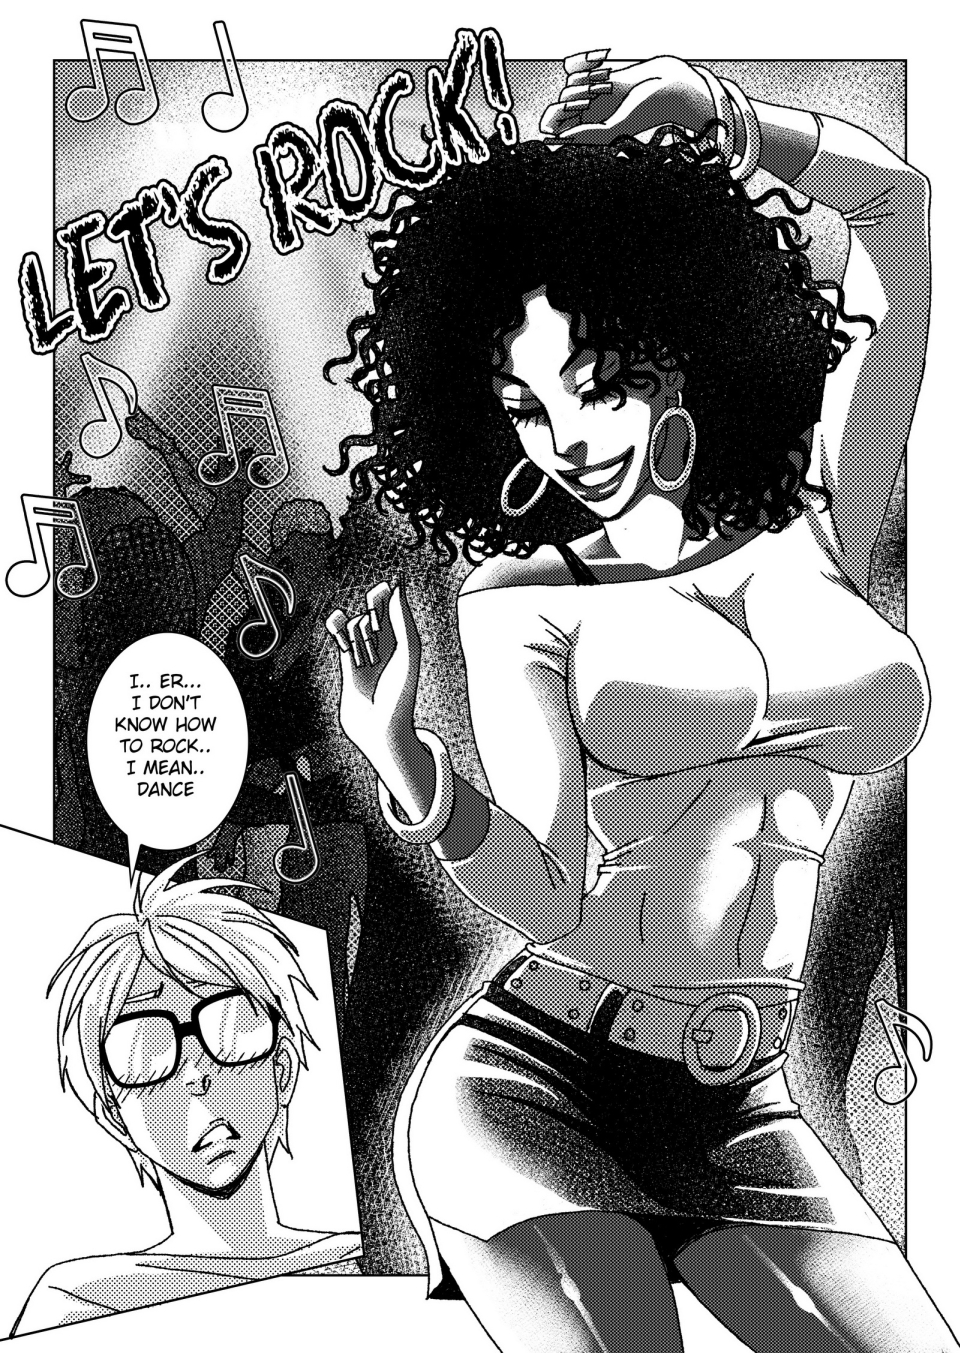 Read Anal Invaders Anasheya Hentai Porns Manga And Porncomics Xxx